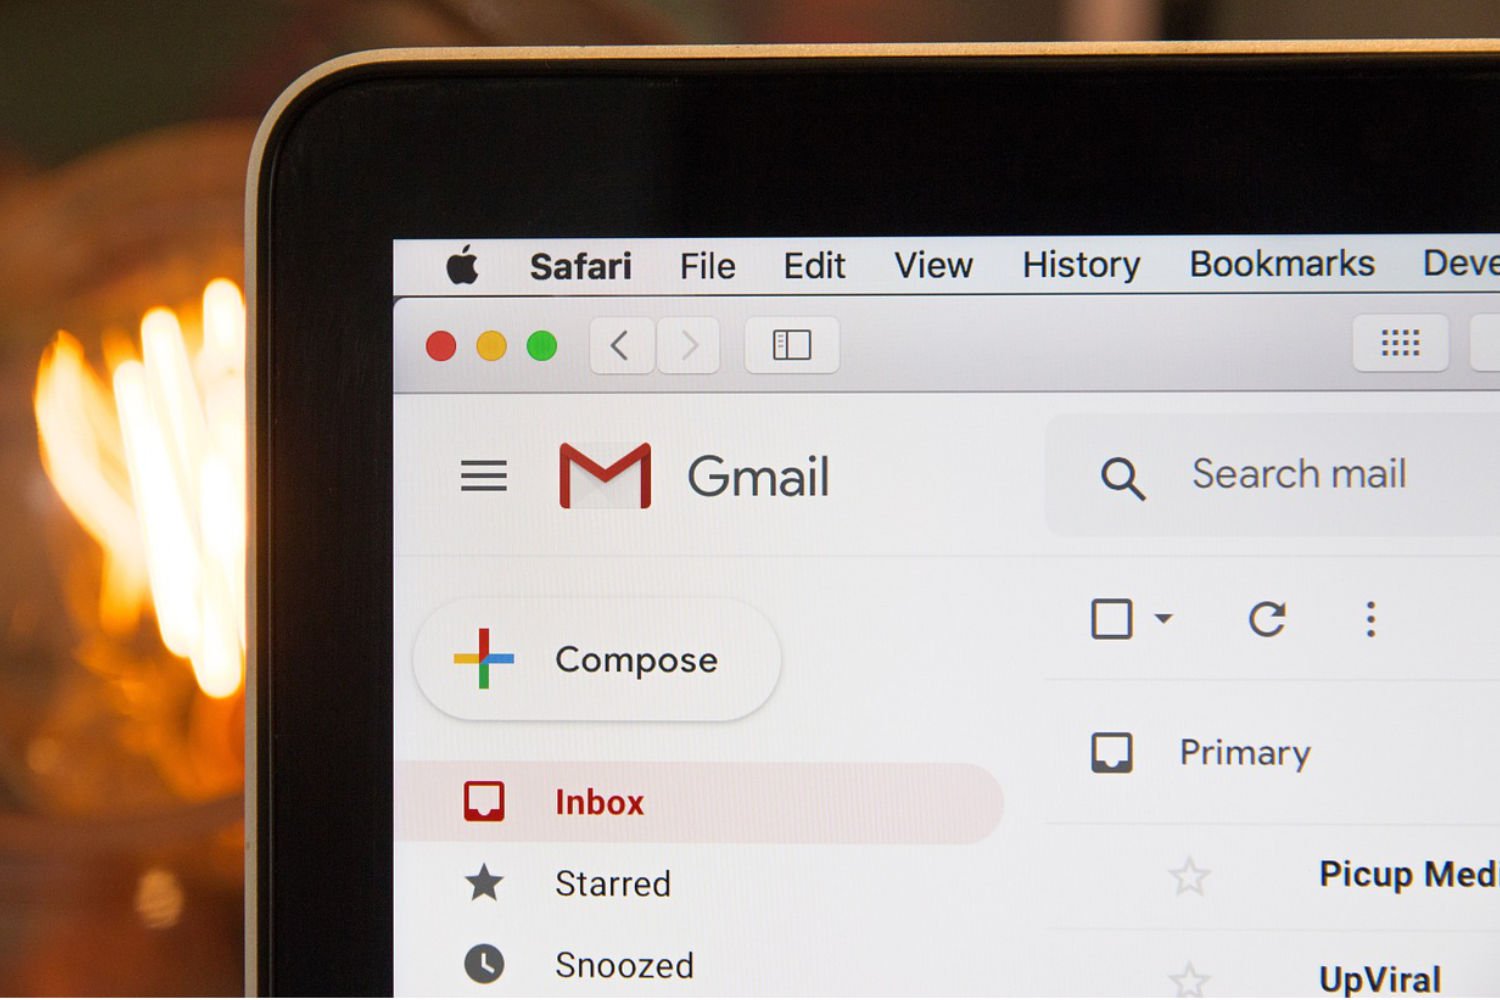 Gmail apple newsletter